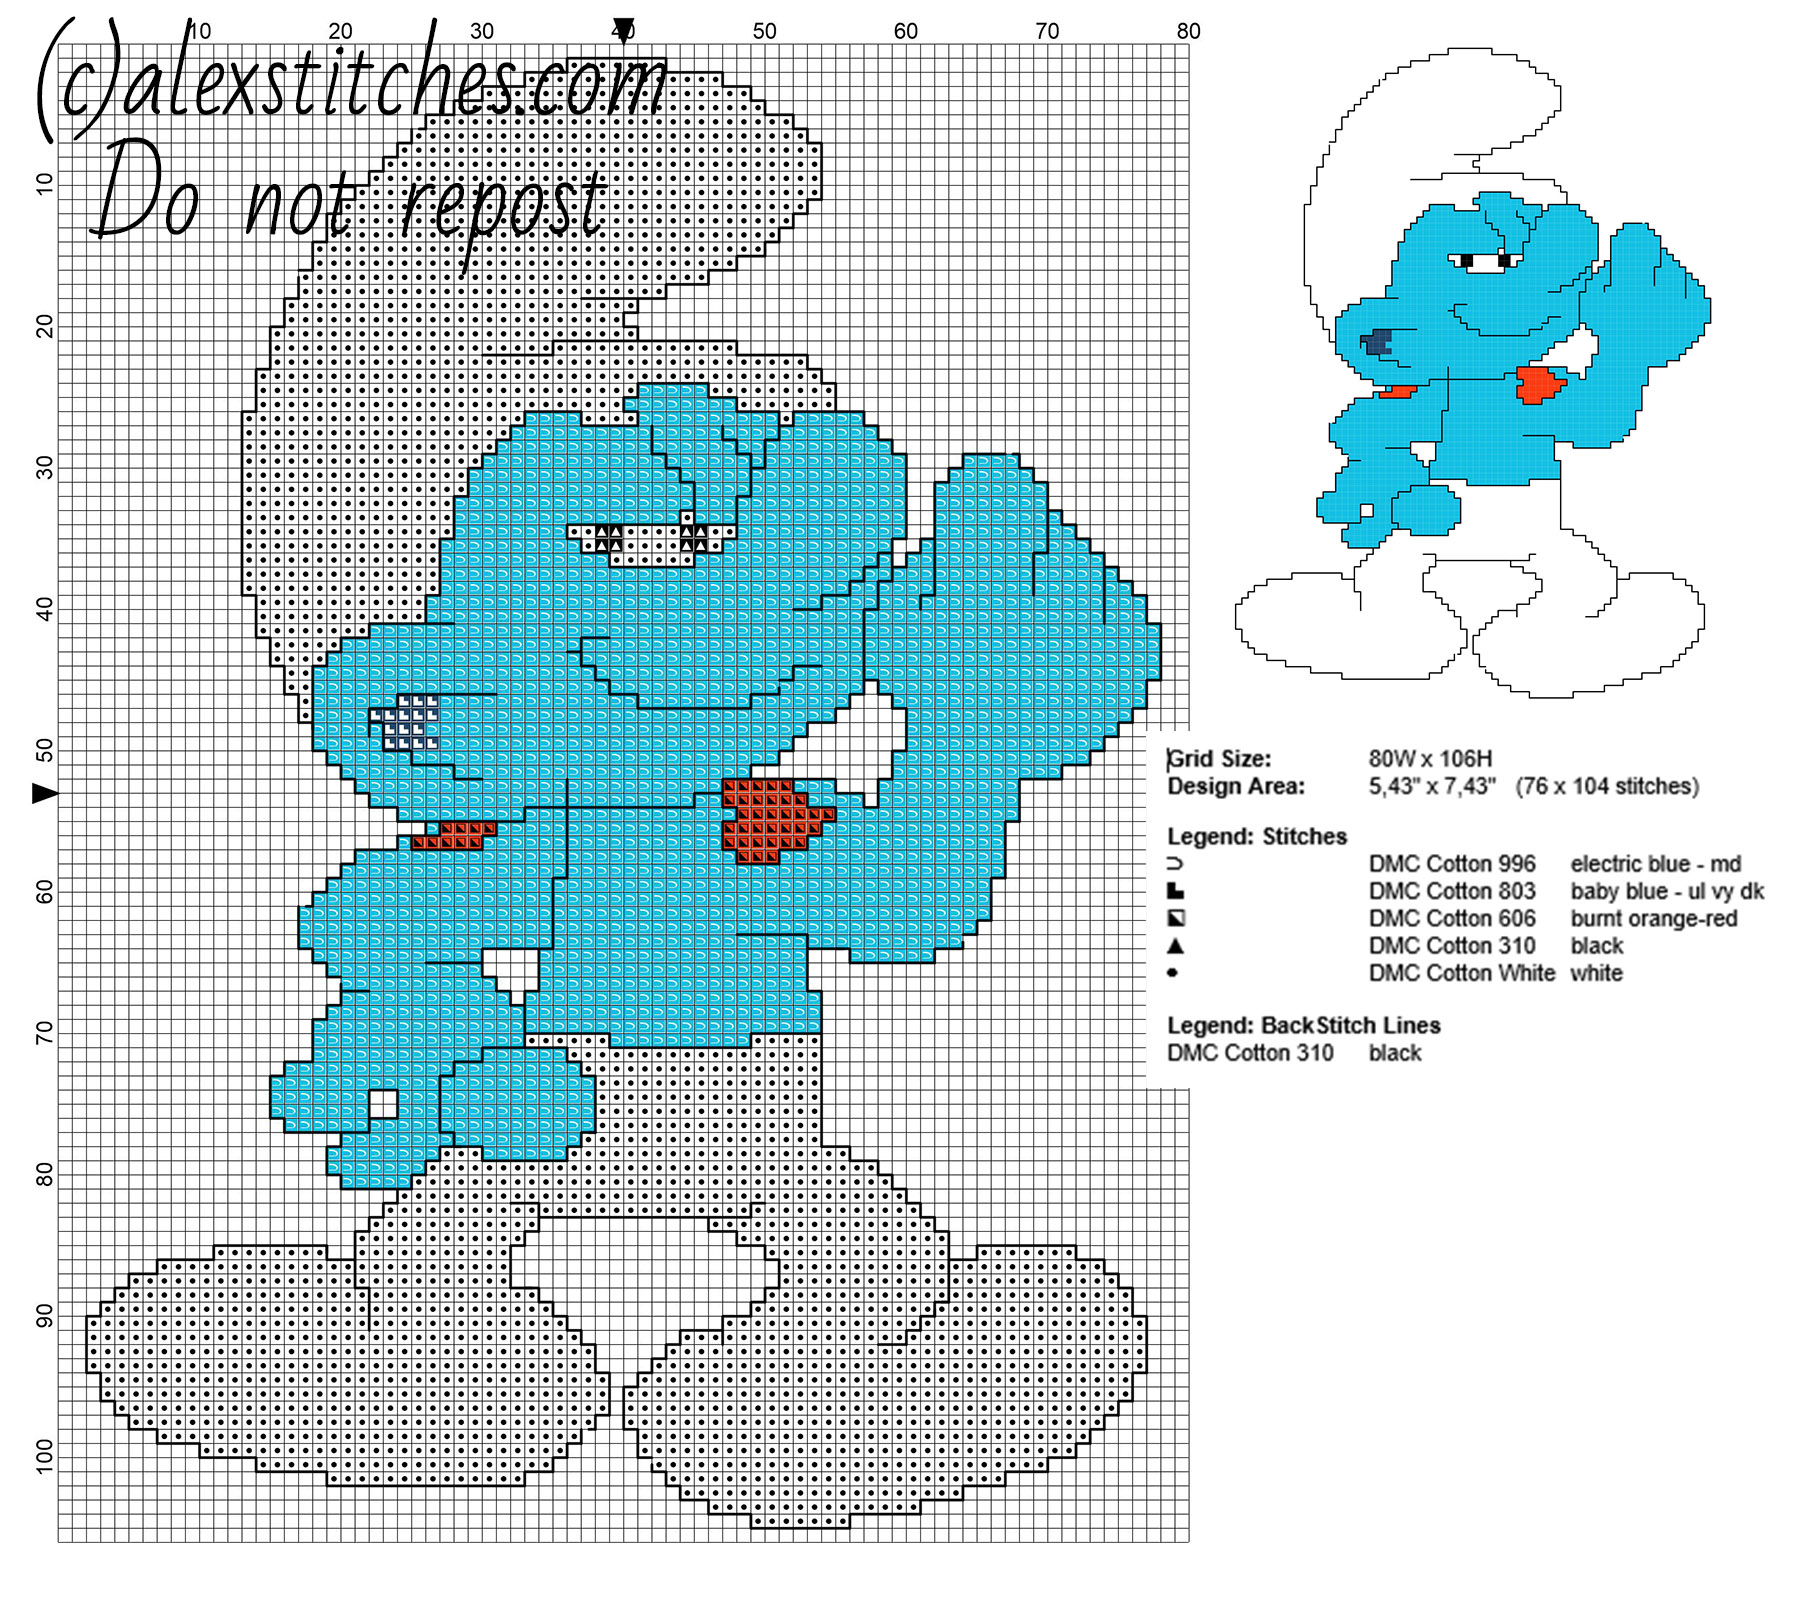 Hefty Smurf from The Smurfs cartoons free cross stitch pattern 76 x 104 stitches 5 DMC threads